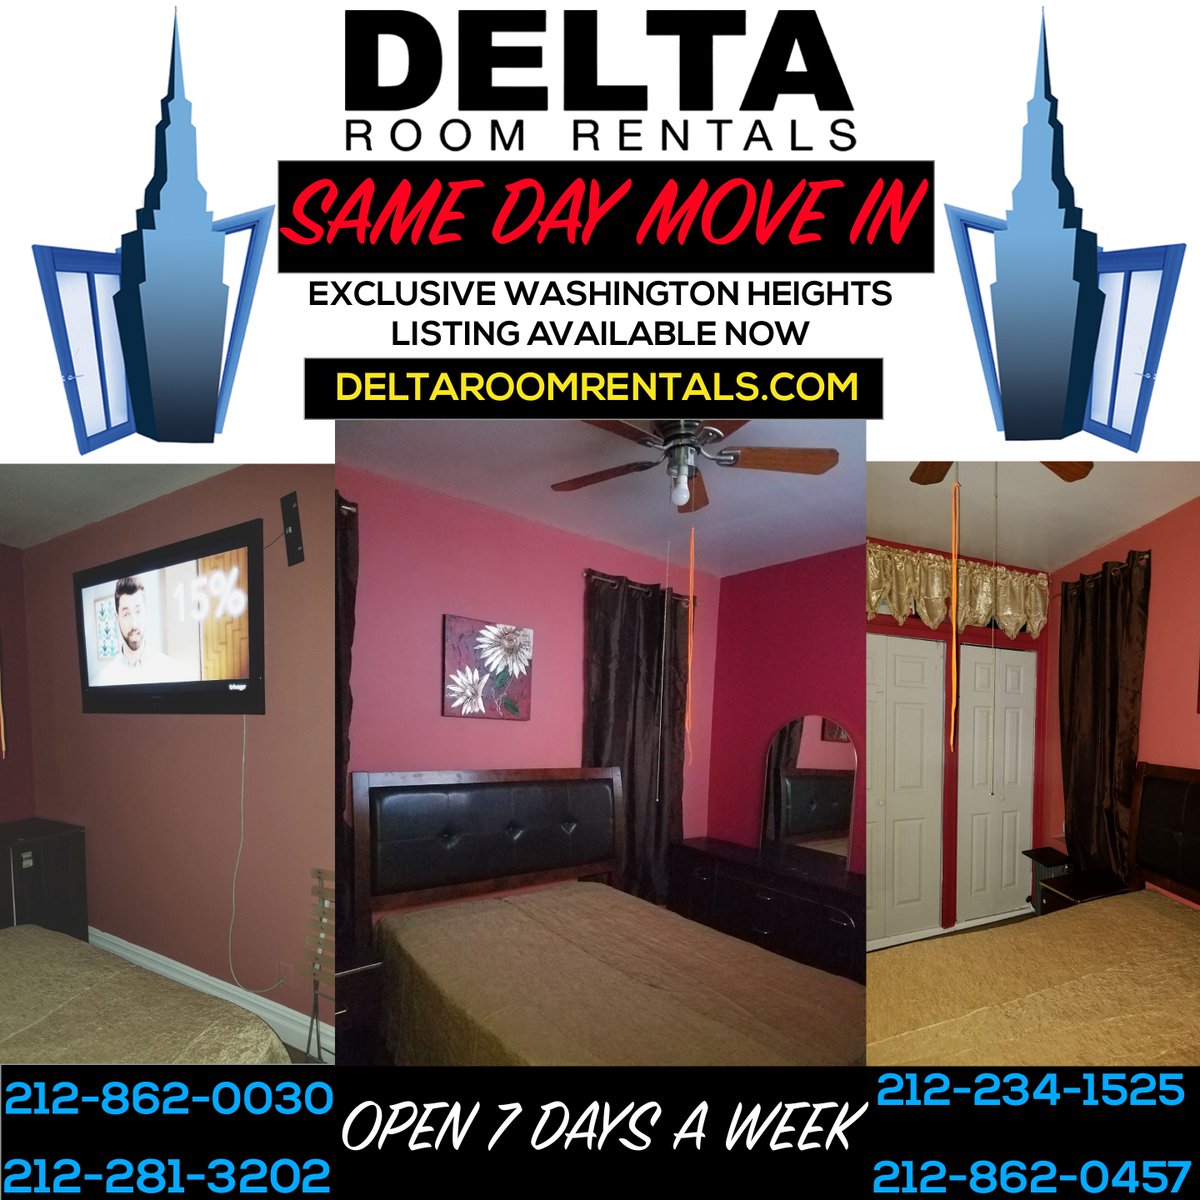 Delta Room Rentals Deltaroomrental Twitter